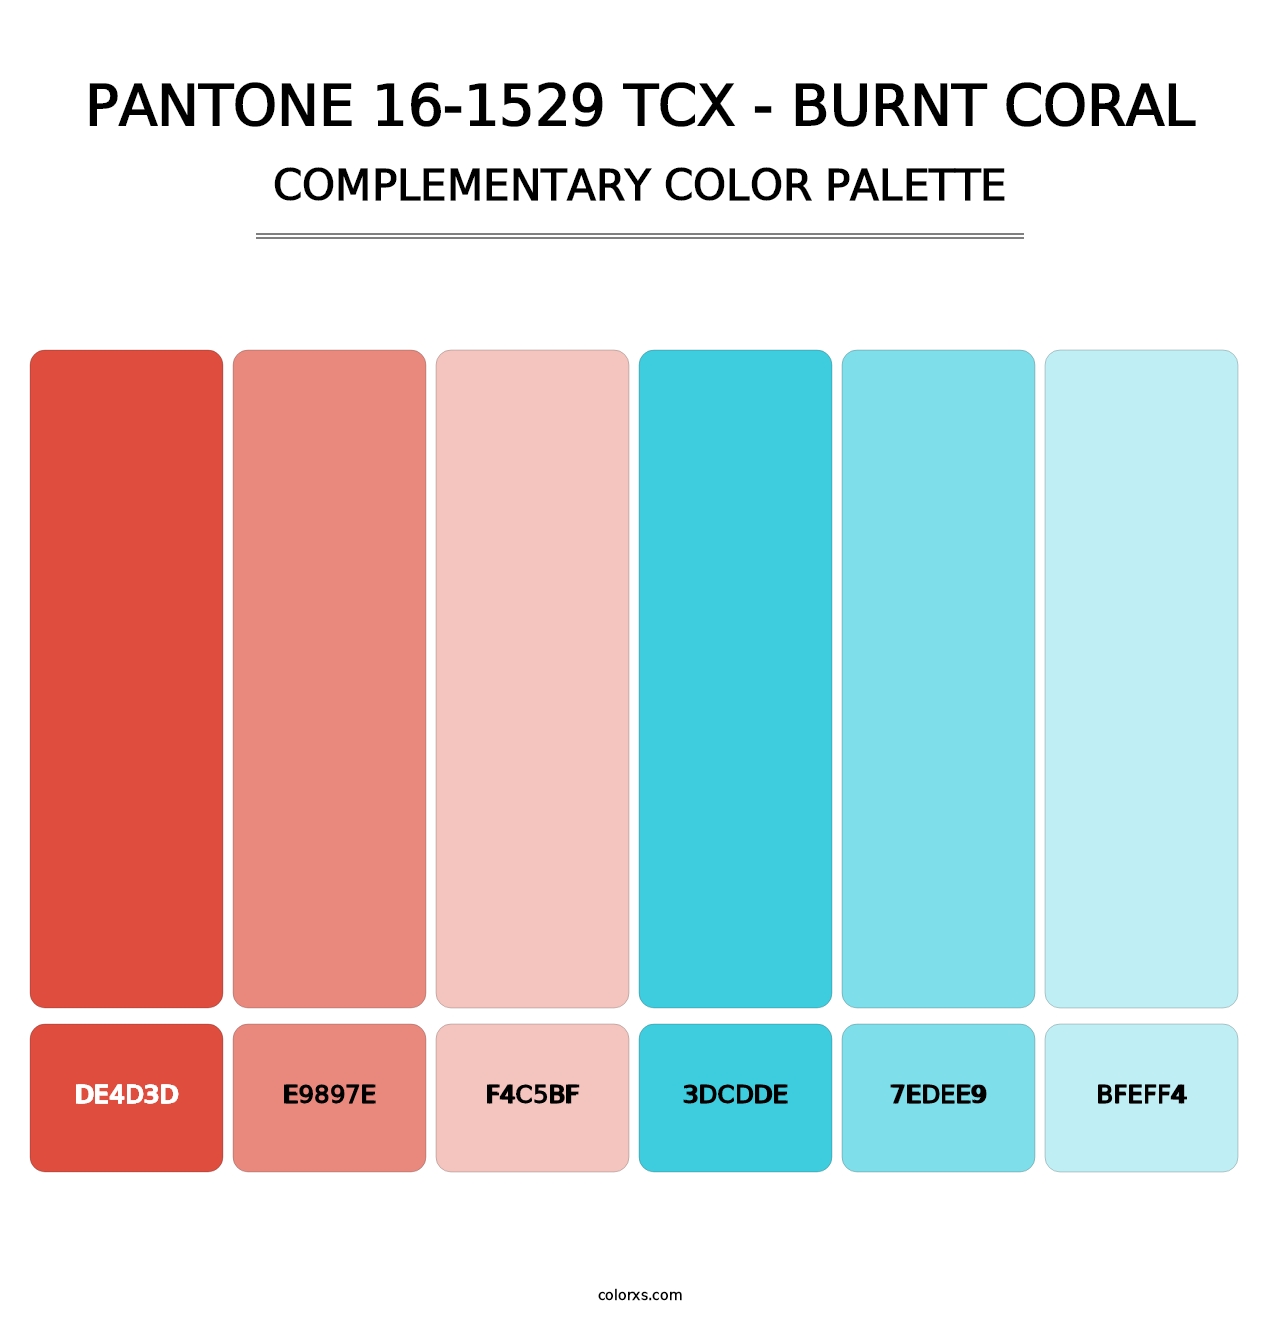 PANTONE 16-1529 TCX - Burnt Coral - Complementary Color Palette